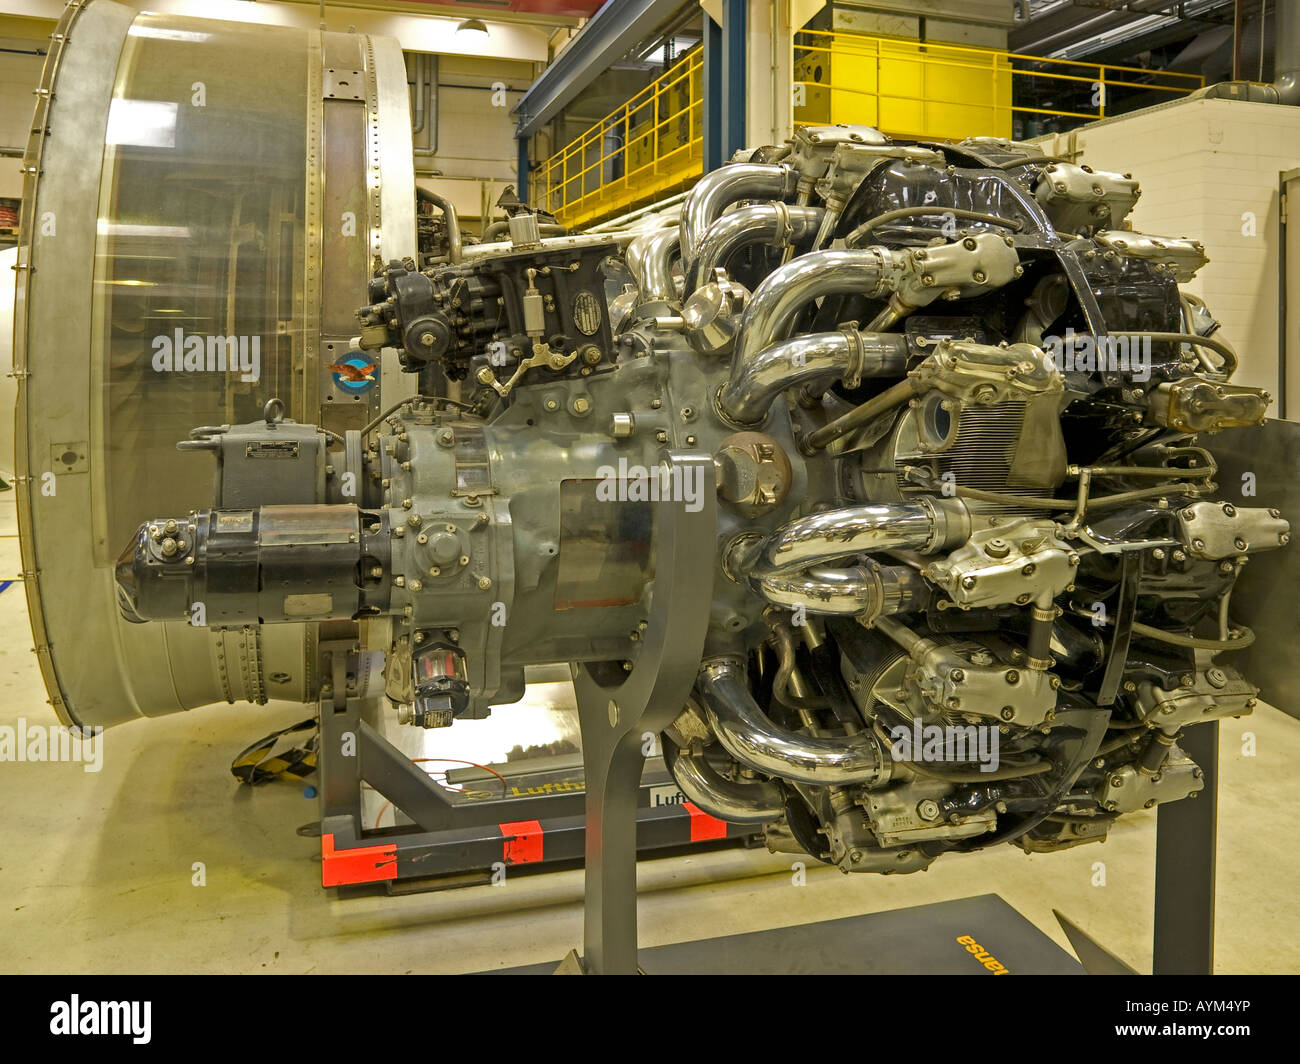 Hubkolbenmotor -Fotos und -Bildmaterial in hoher Auflösung – Alamy